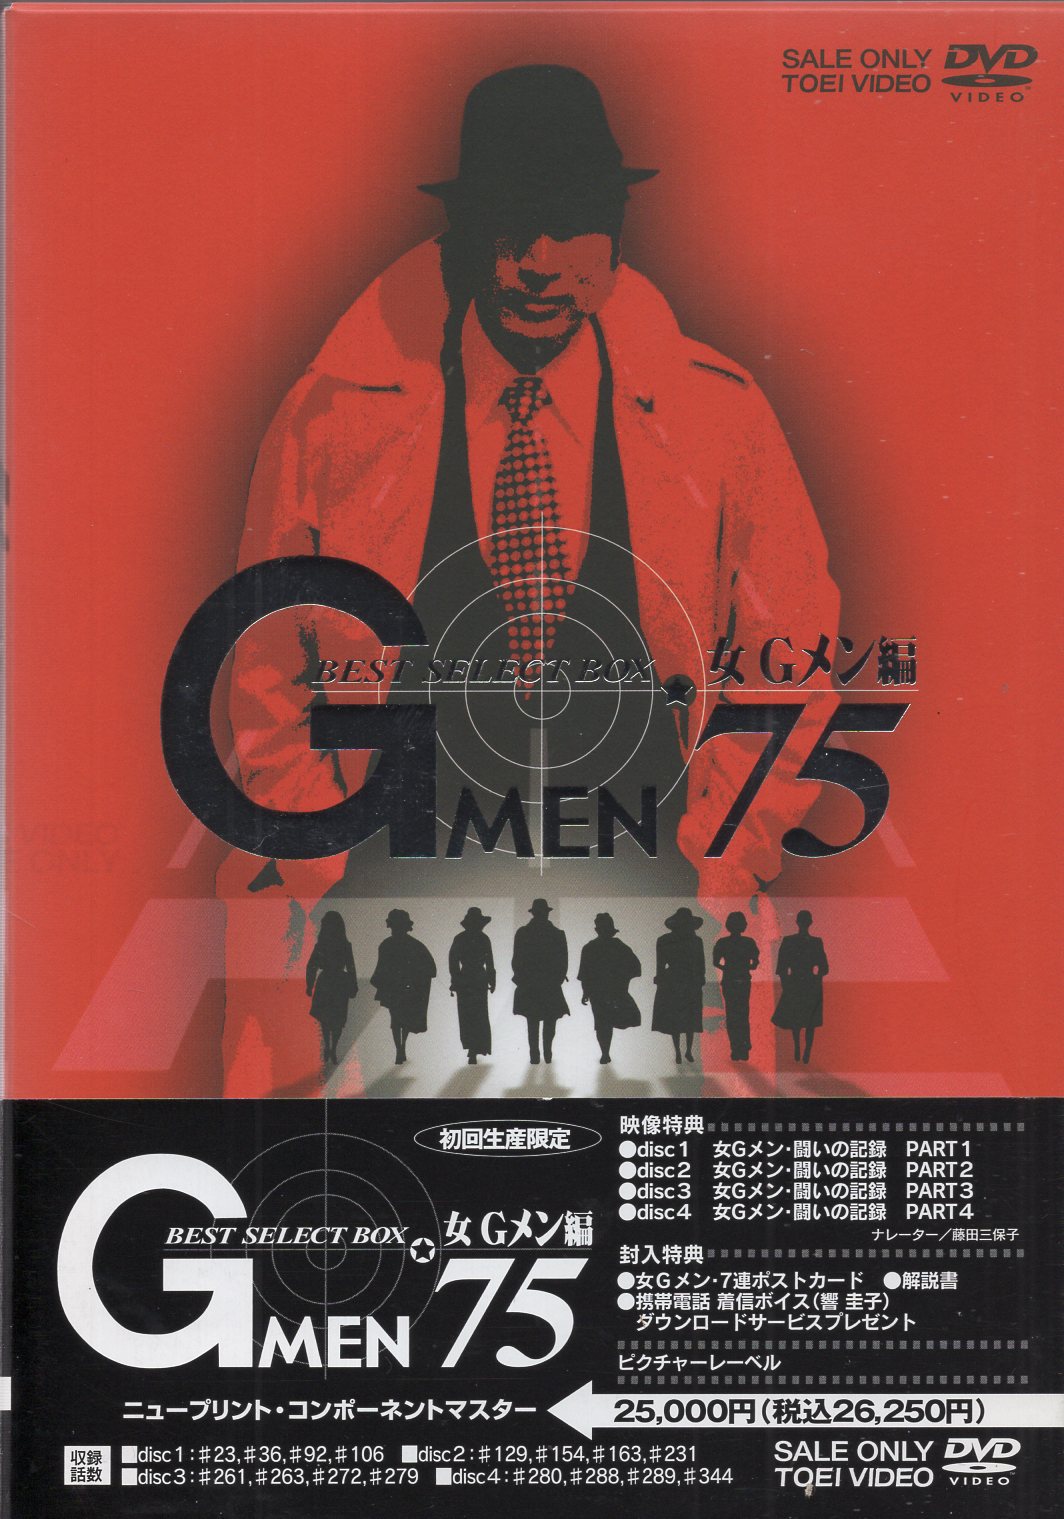 Gメン’75 BEST SELECT BOX 女Gメン編 [DVD] o7r6kf1